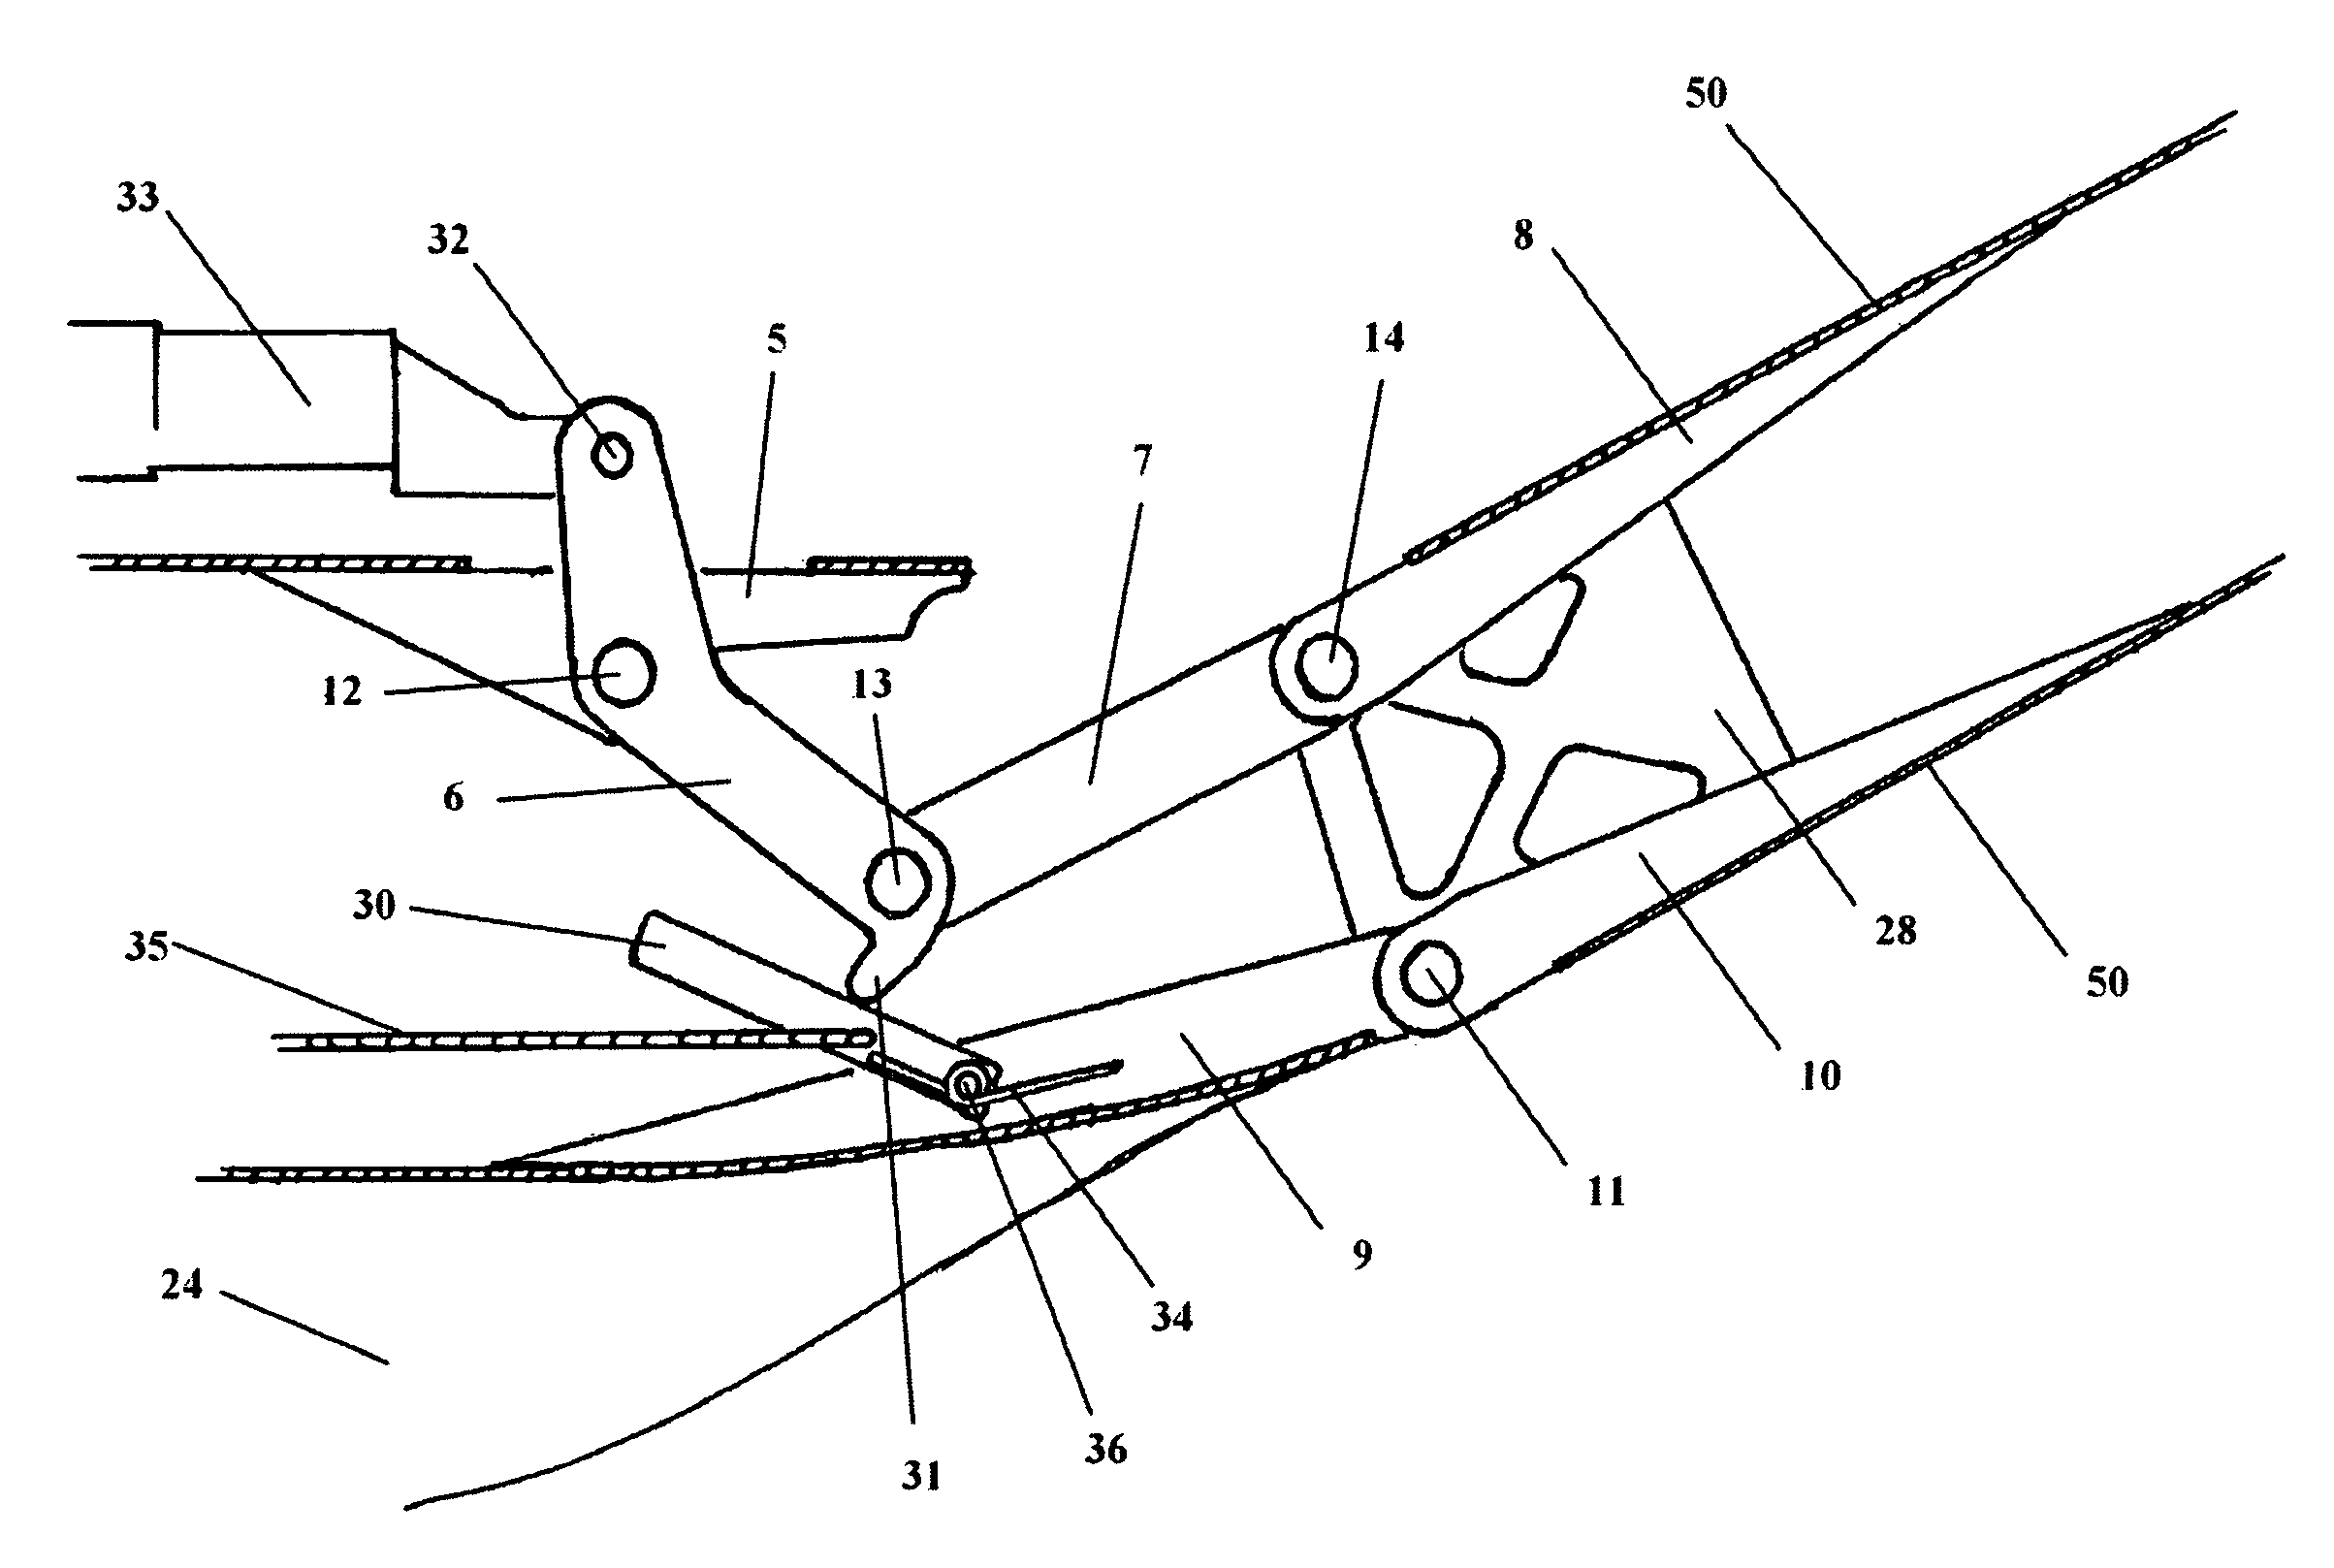 Folding wing root mechanism